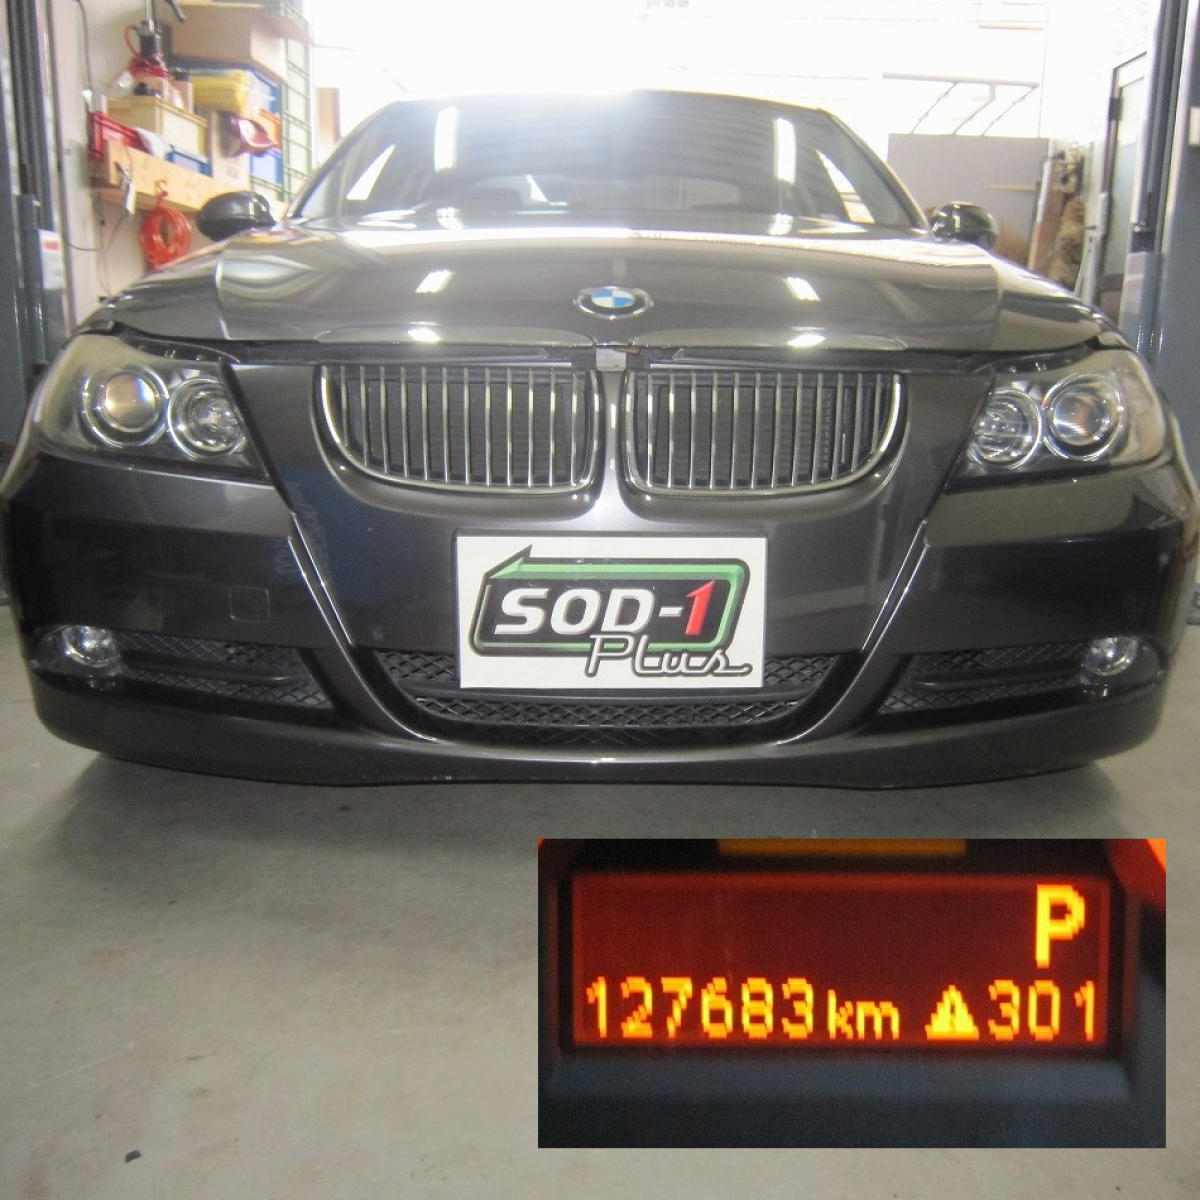 BMW 323i(E90) ATフルード交換+SOD1Plusで発進時のもたつきと変速ショック改善 導入事例